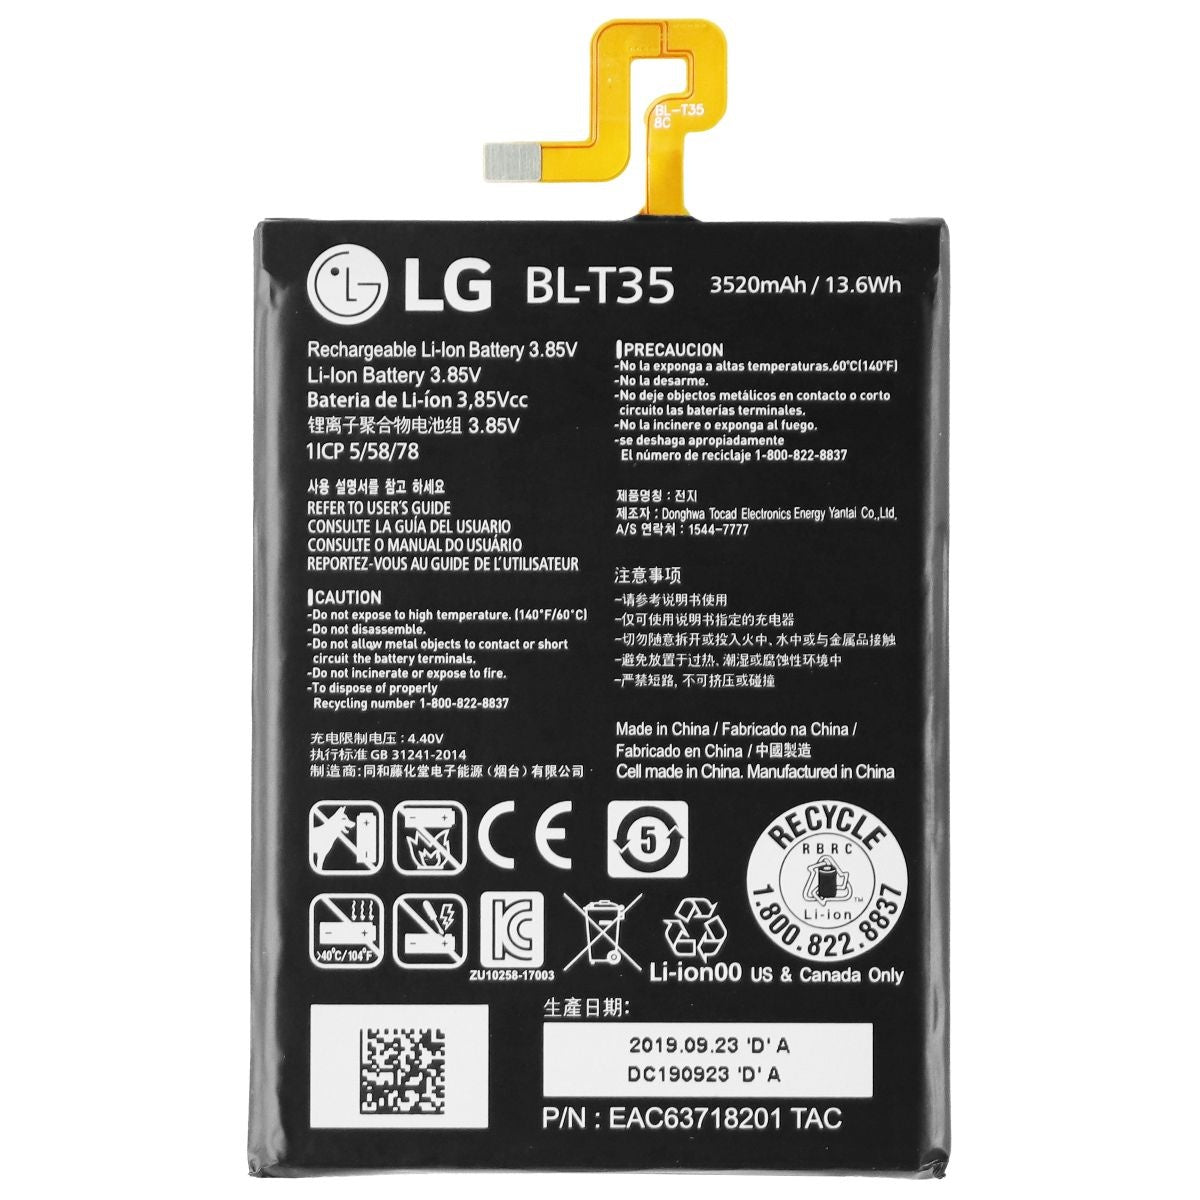 LG 3.85V Rechargeable 3,520mAh Li-ion Battery - Black (BL-T35) OEM Cell Phone - Batteries LG    - Simple Cell Bulk Wholesale Pricing - USA Seller